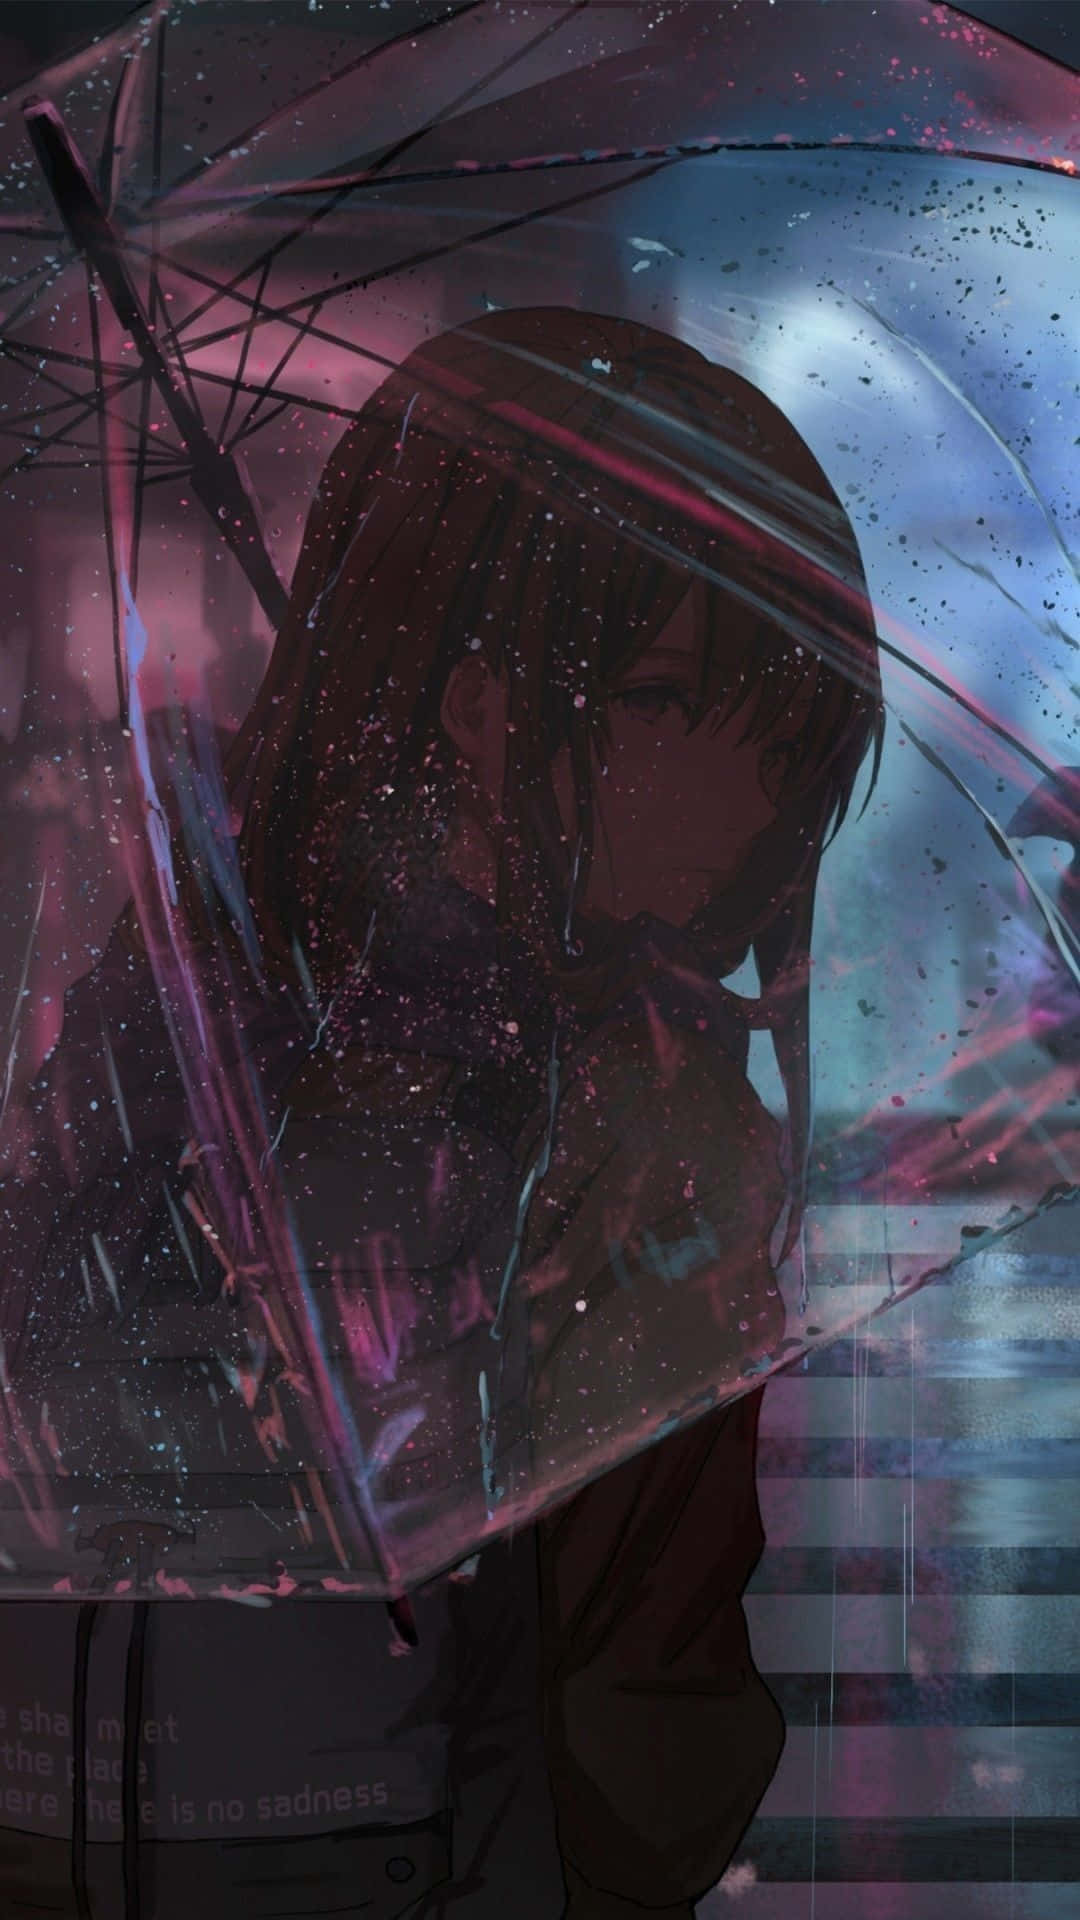 Sad Depressing Anime Girl Umbrella Rain Background